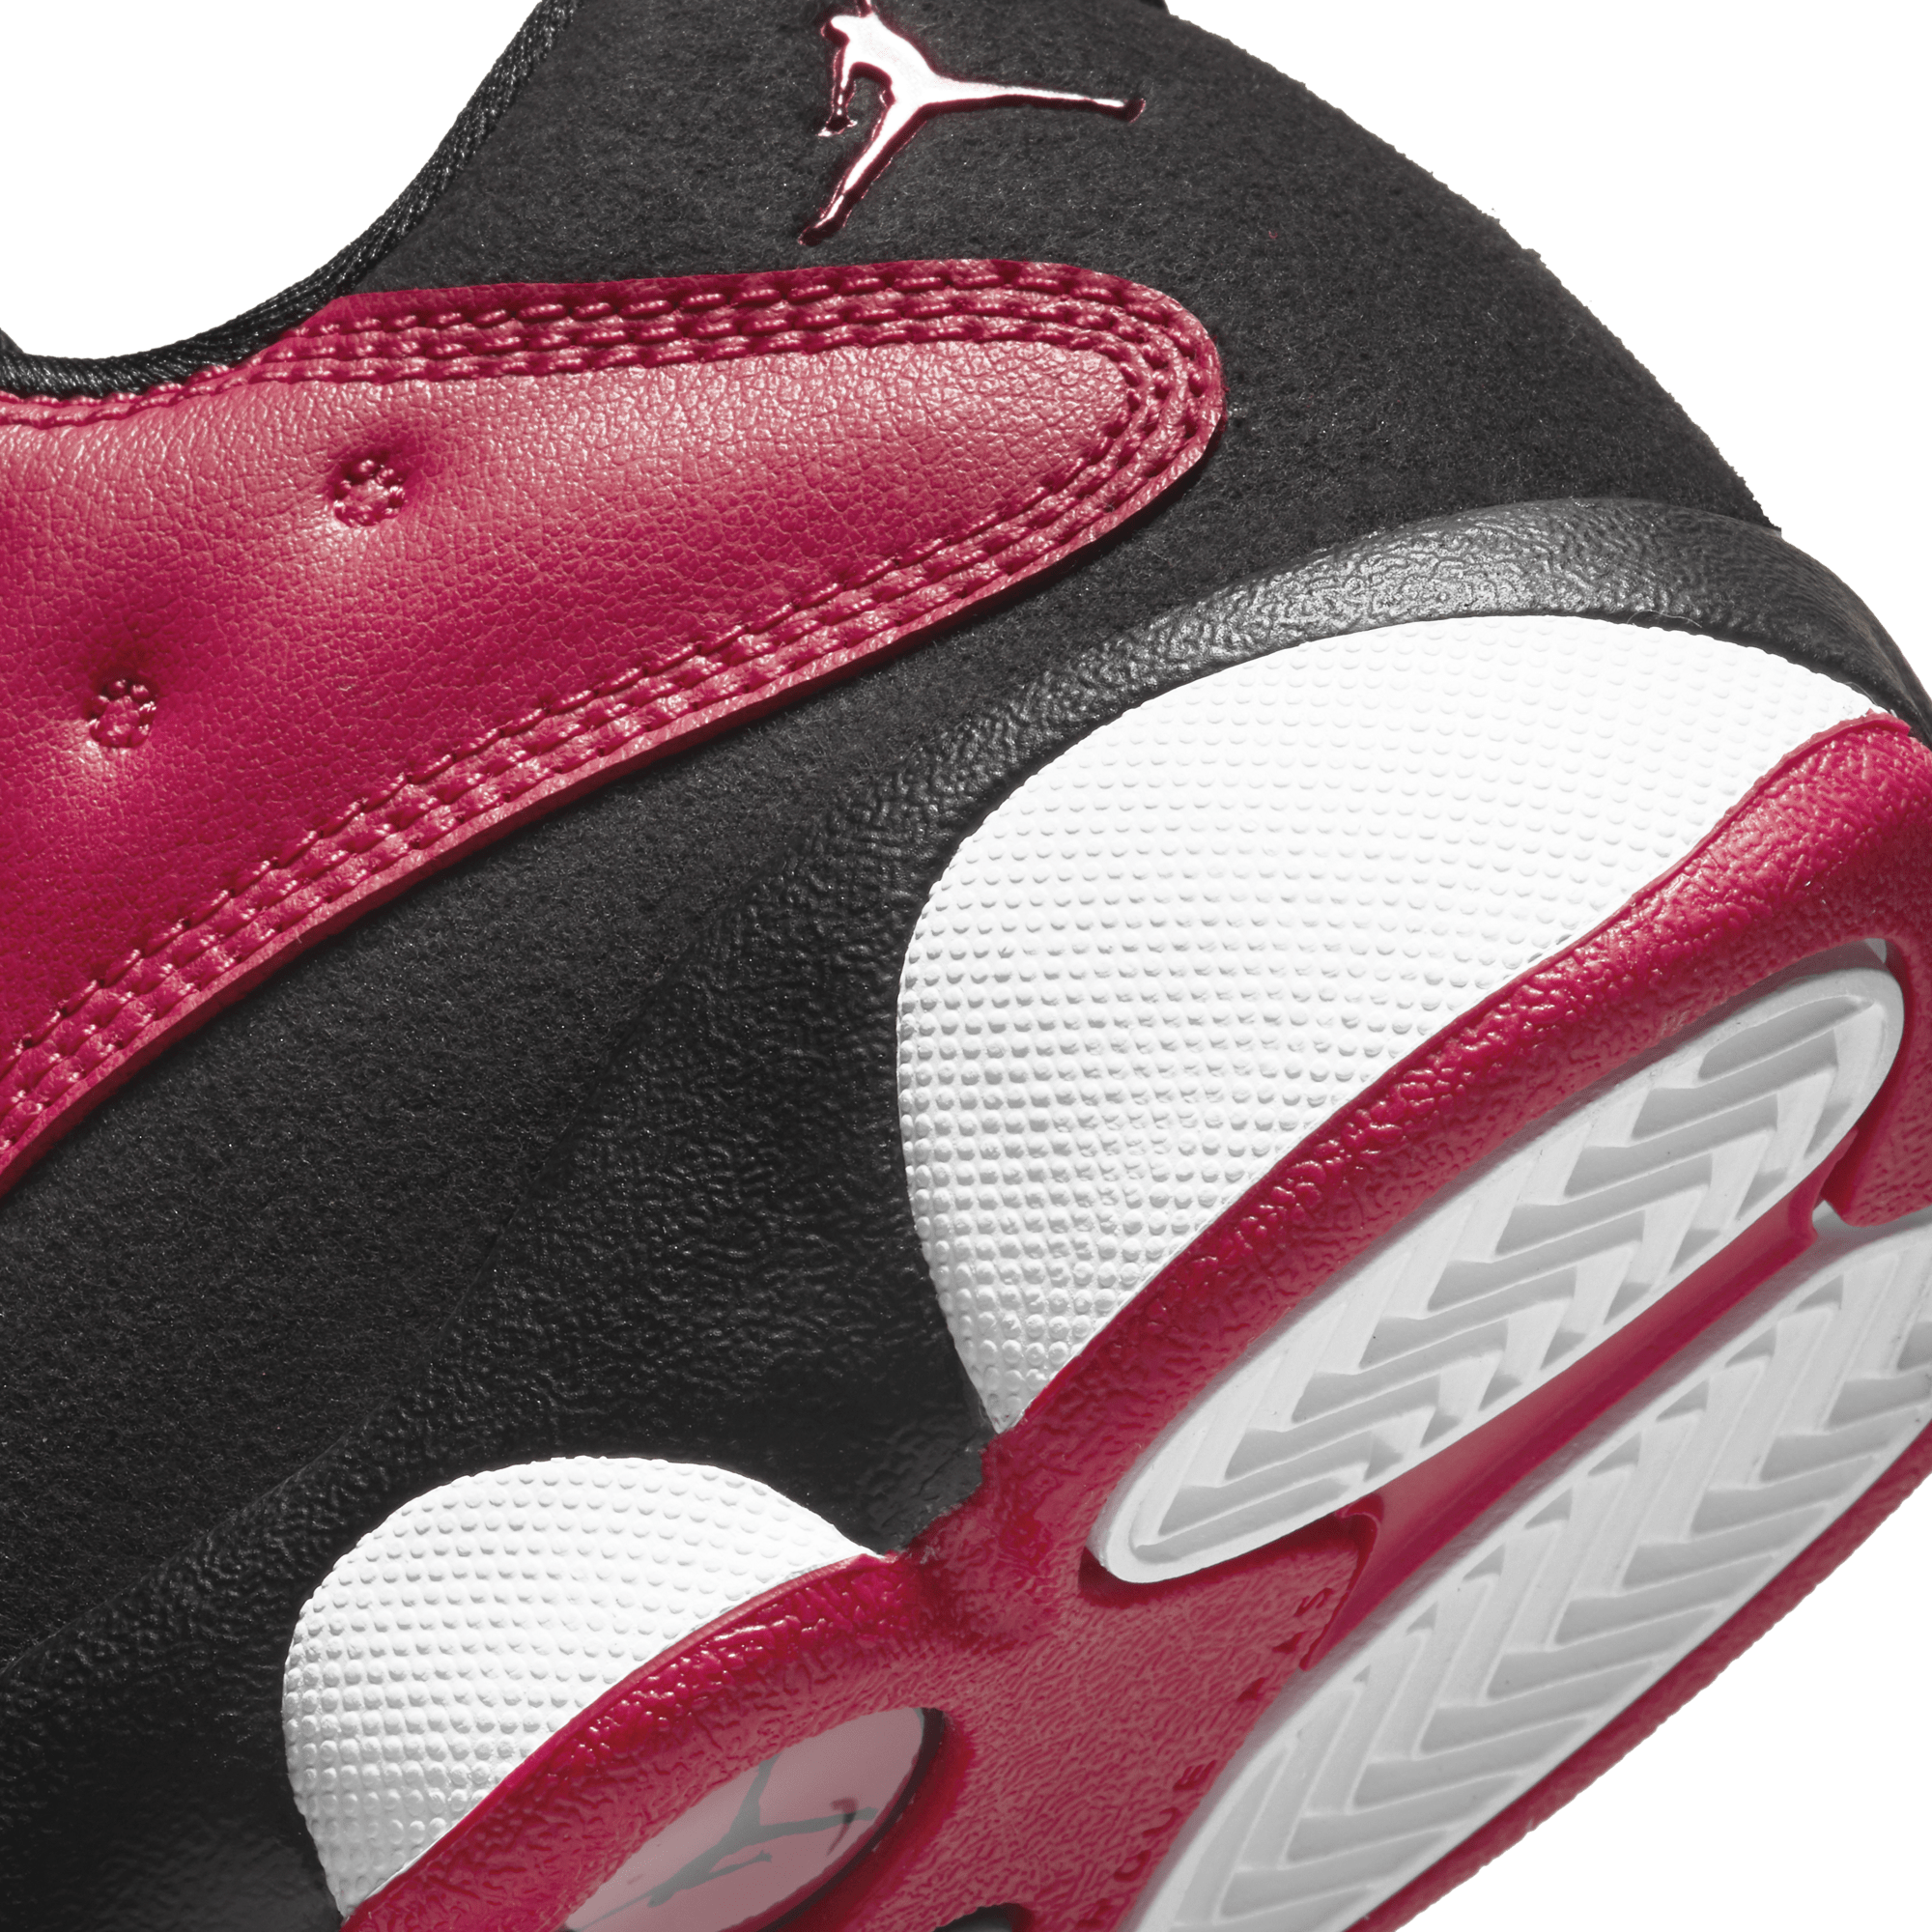 Air Jordan Footwear Air Jordan 13 Retro Low - Preschool